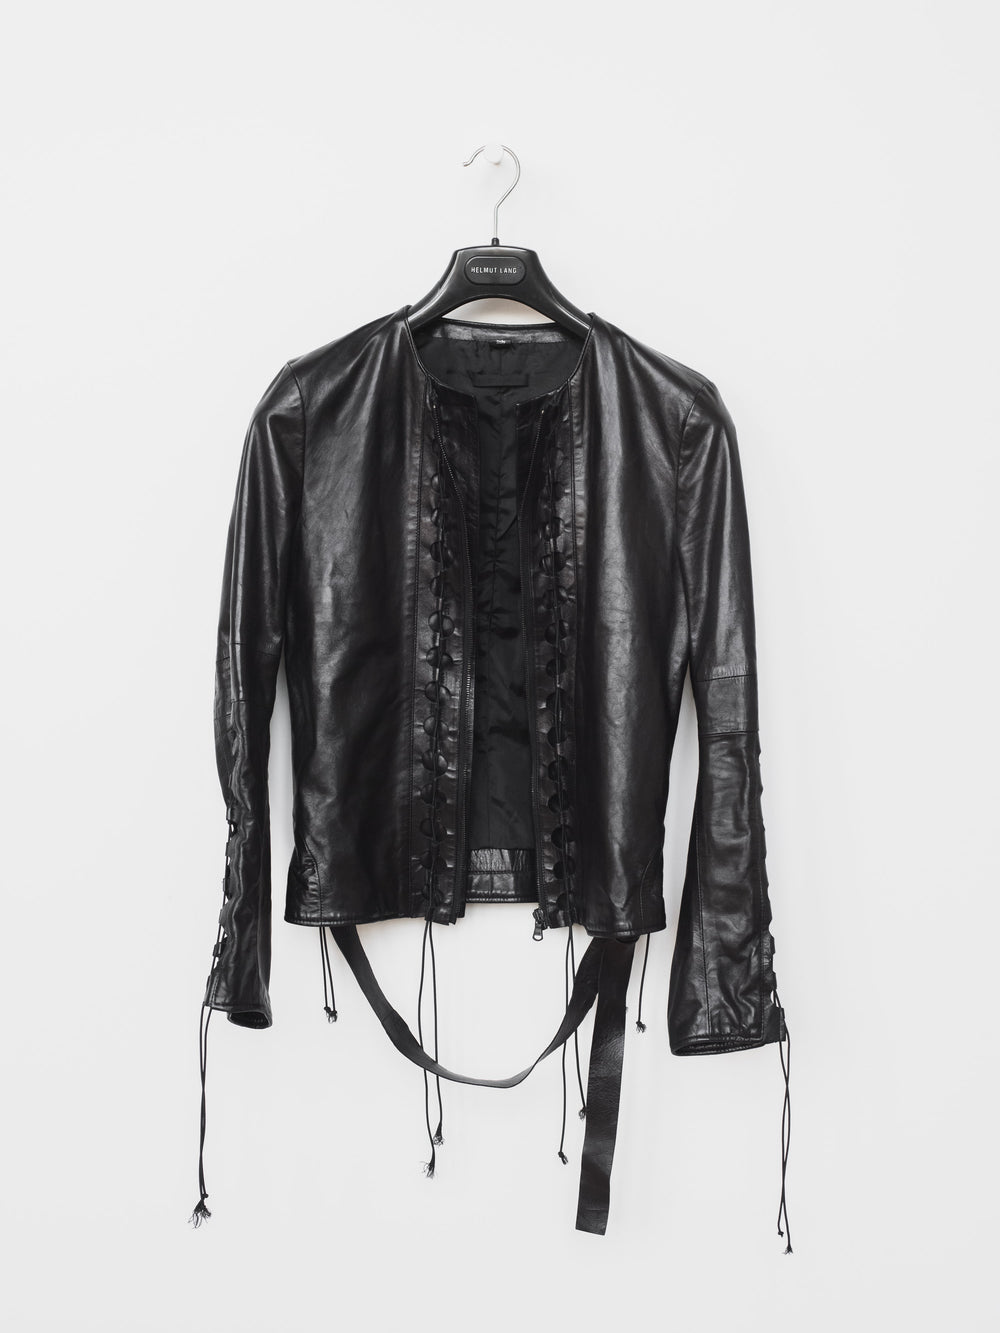 Helmut Lang SS01 Lace Up Corset Leather Jacket